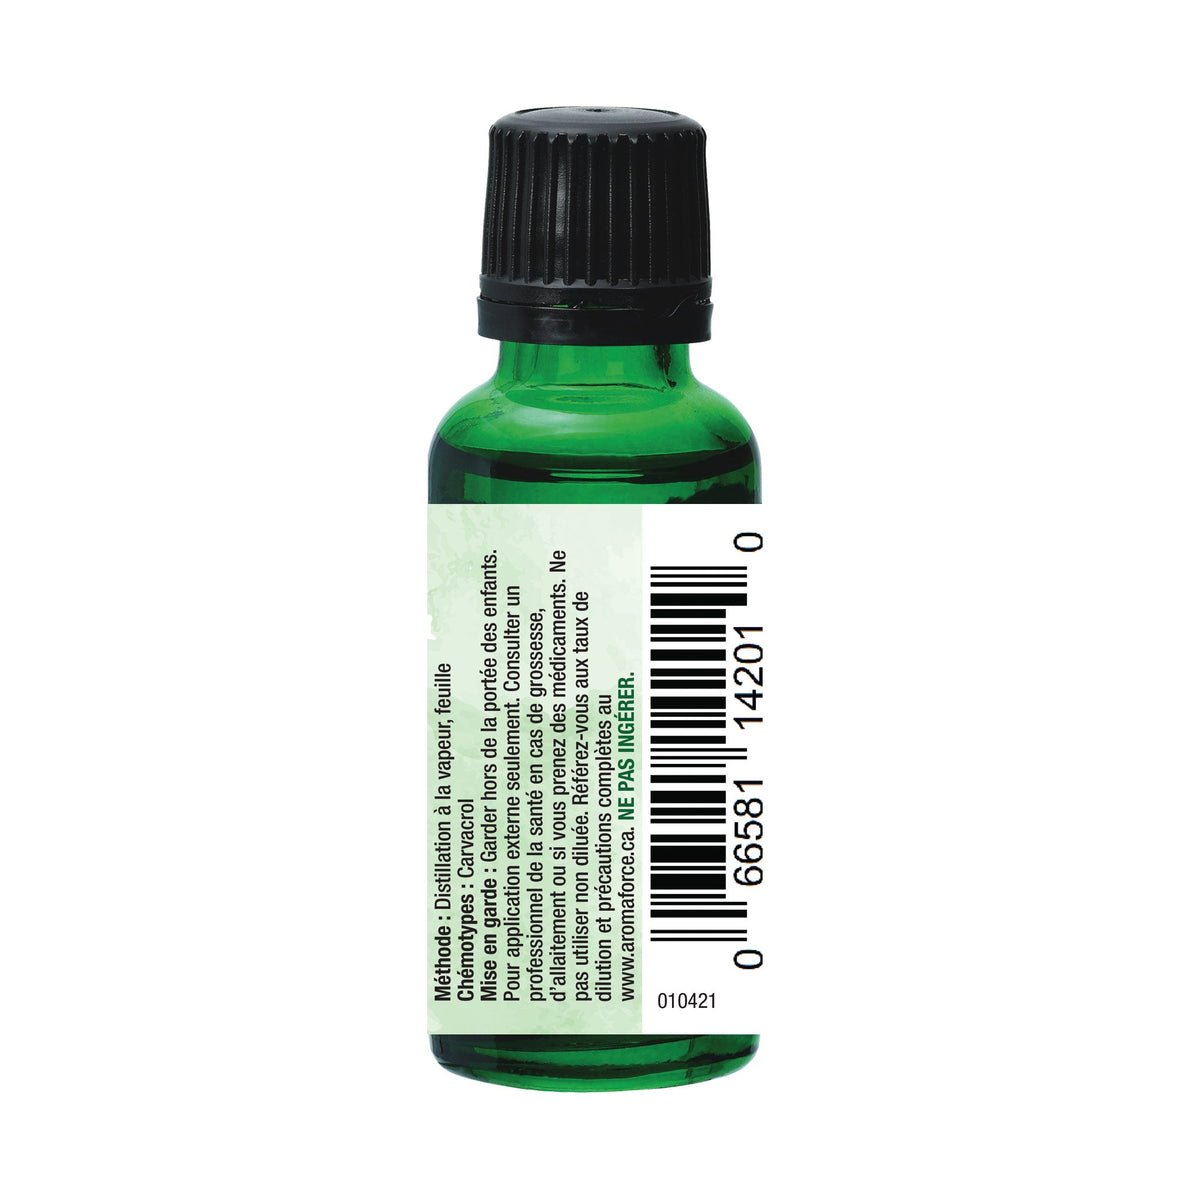 Organic Oregano Essential Oil 100% pure and natural 15mL - Aromaforce - A.Vogel Canada